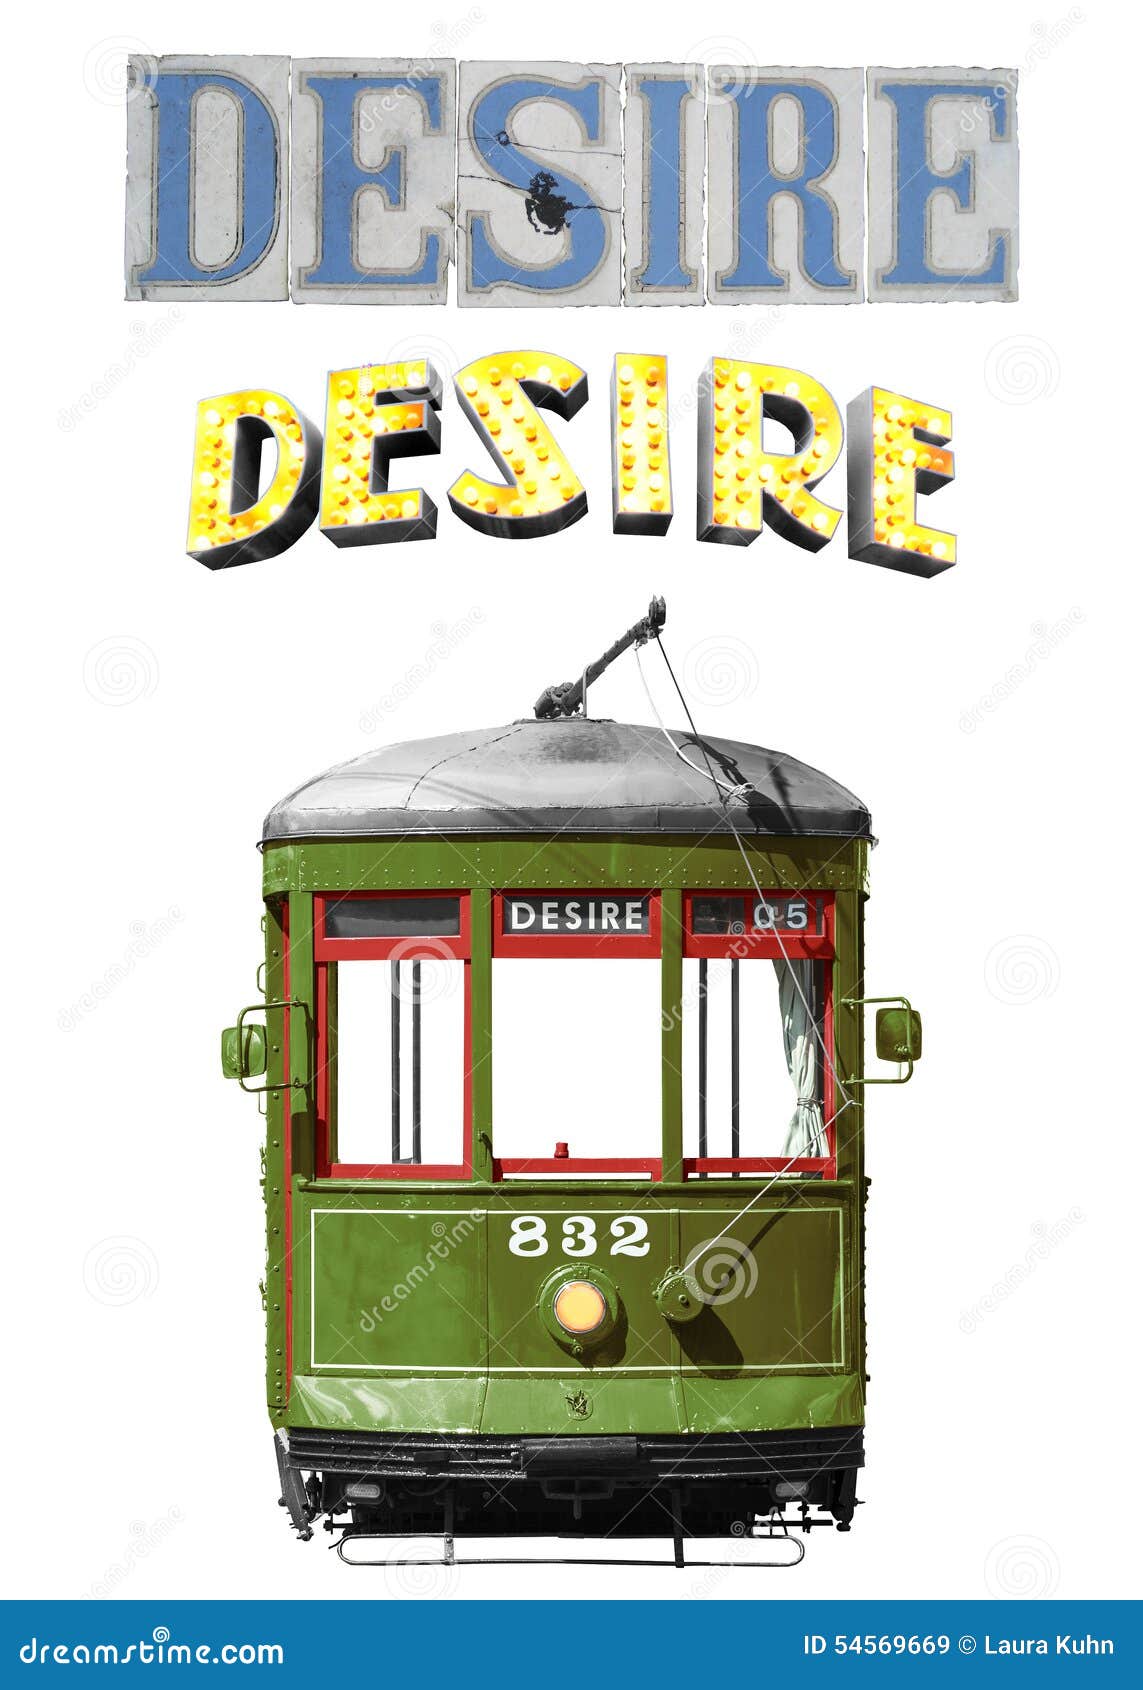 new orleans desire streetcar